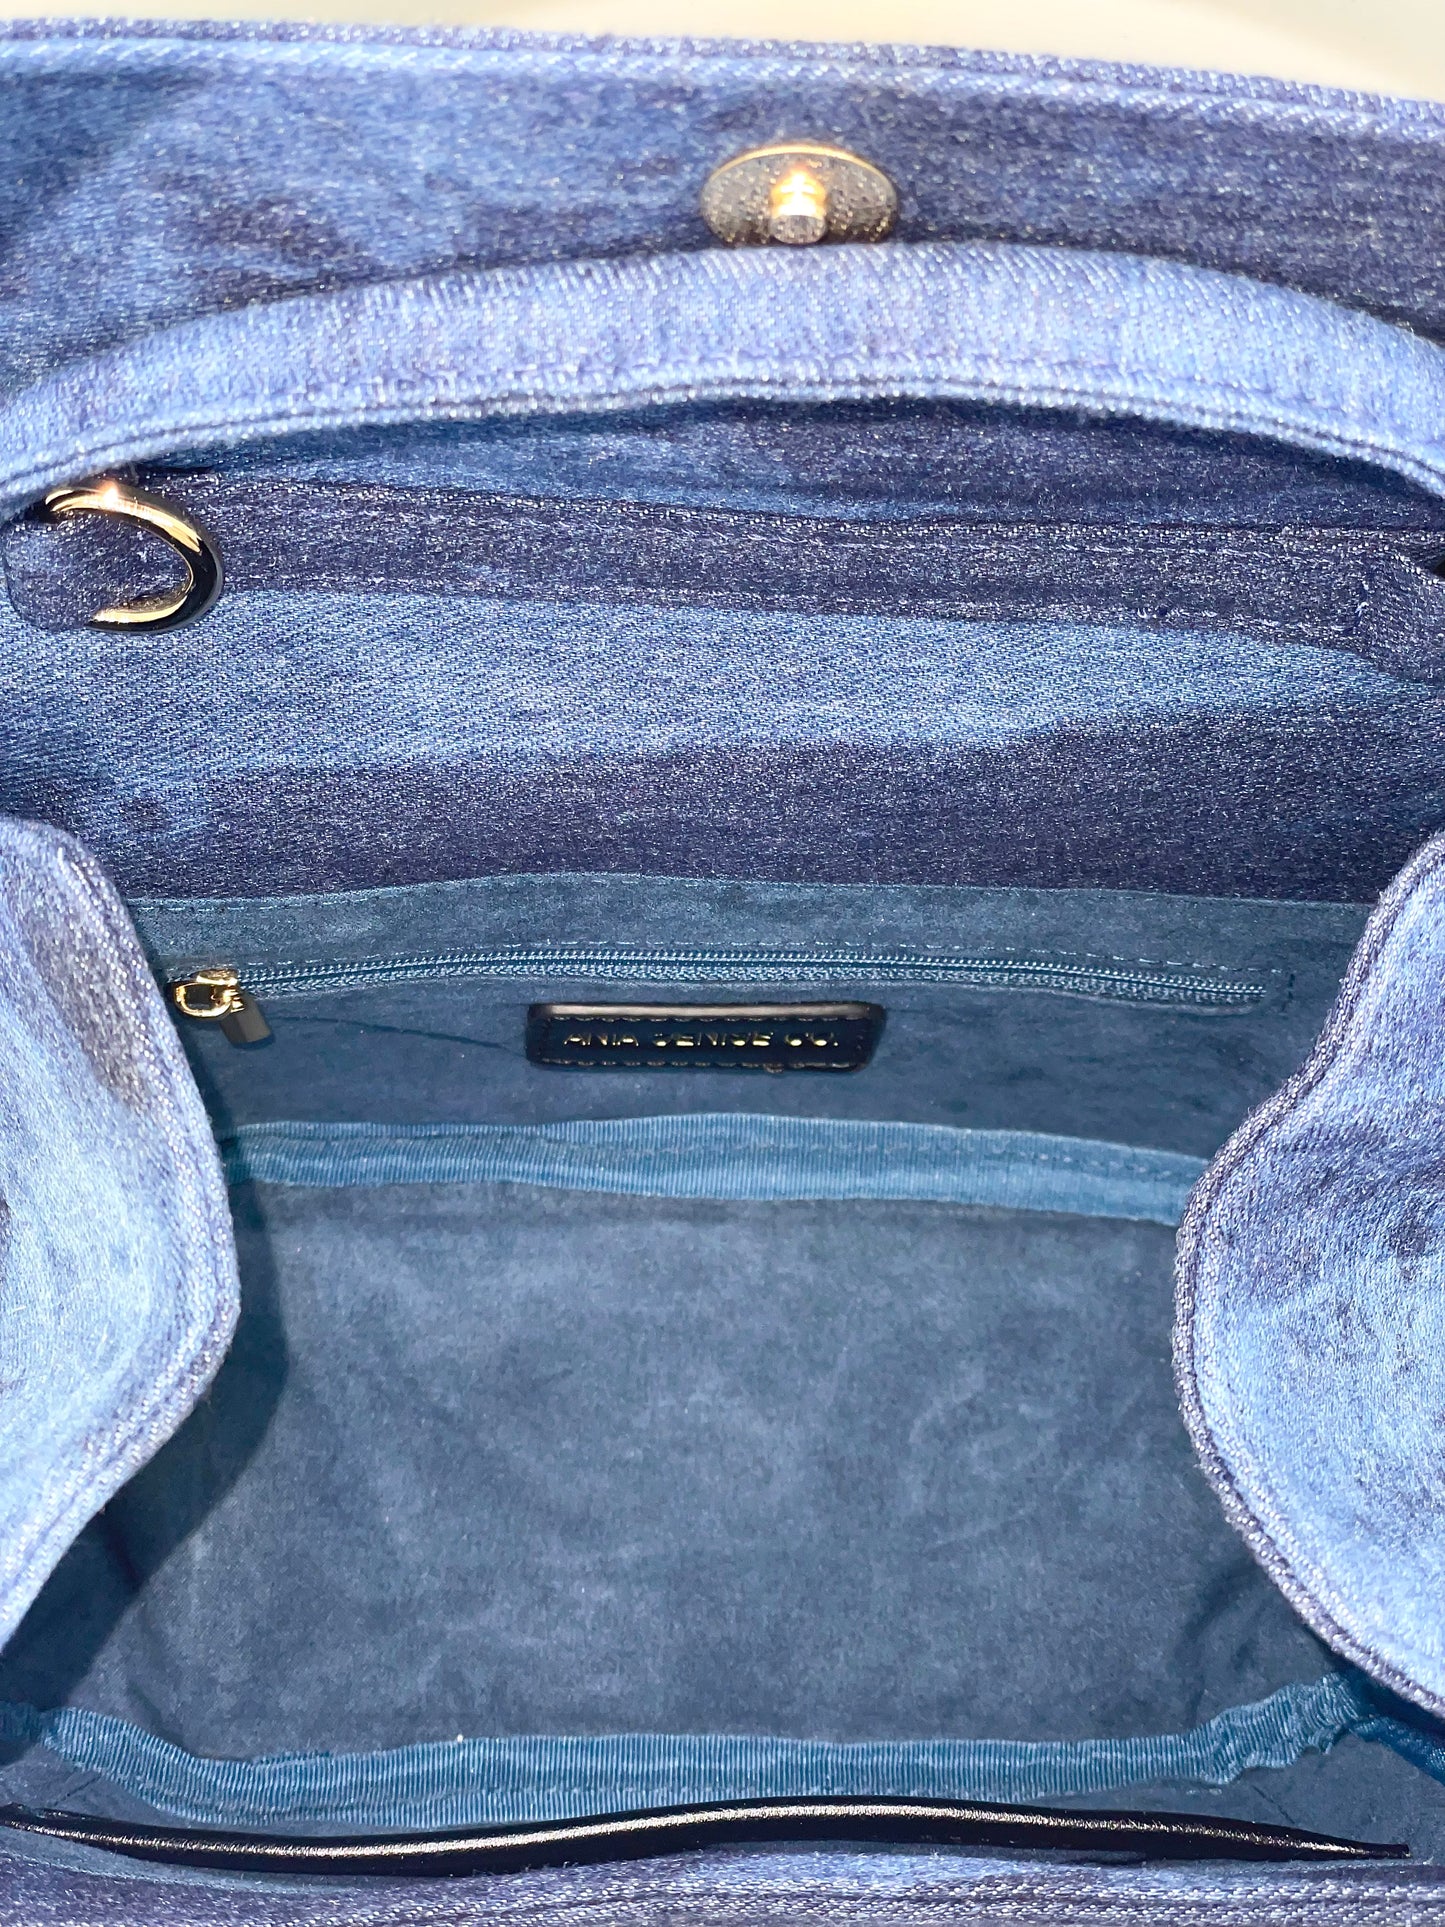 The Lexy Bag